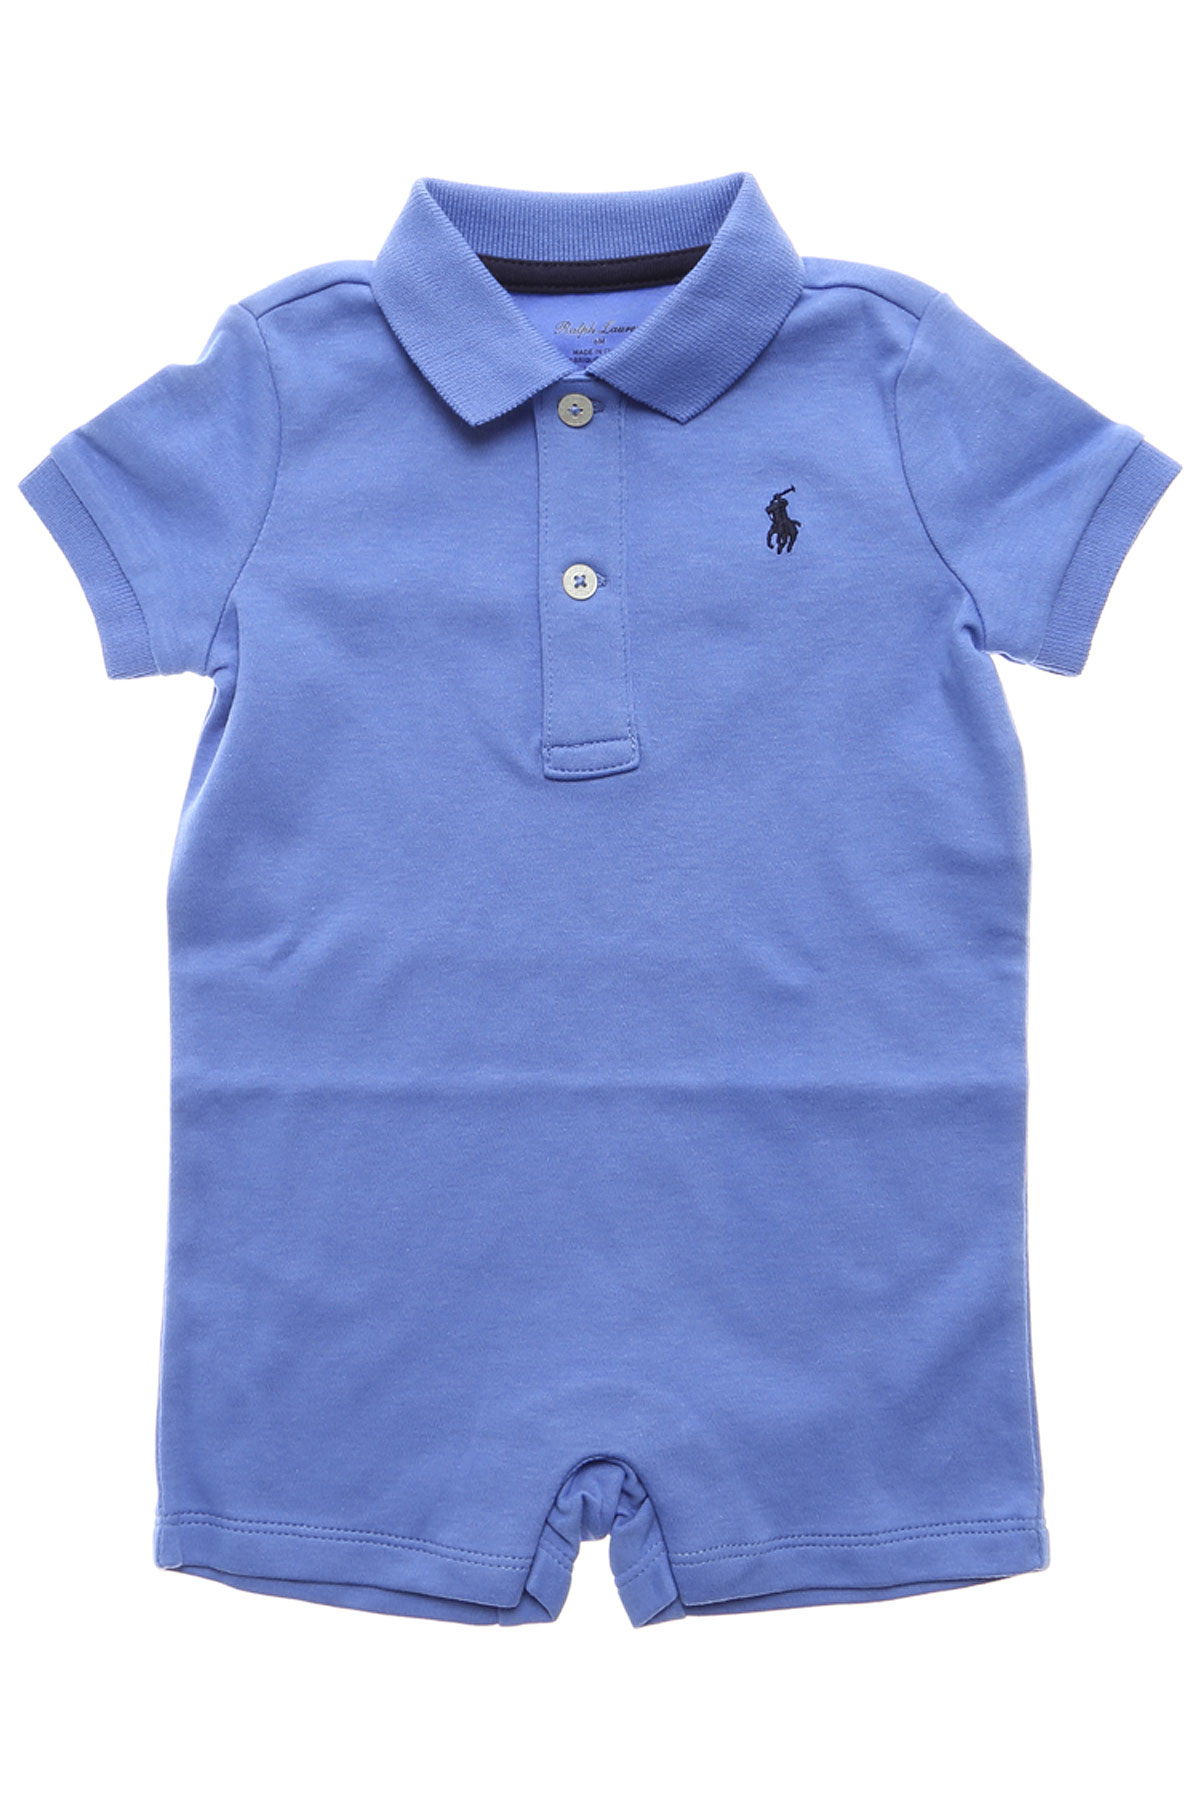 Baby Boy Clothing Ralph Lauren, Style code: xz71g-xy71g-xw6ns